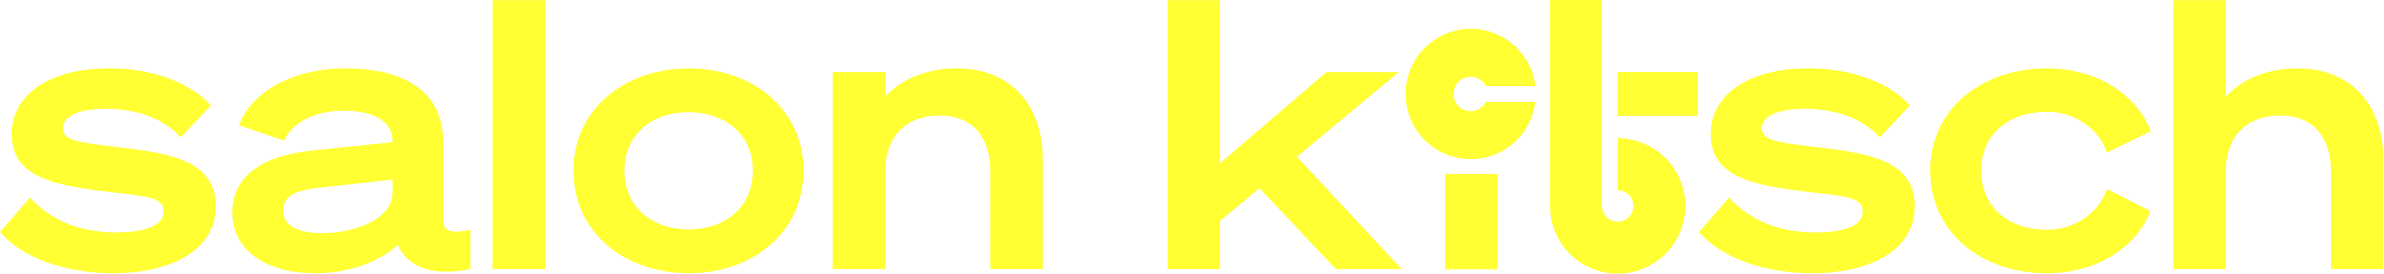 sk_logo_yellow@2x